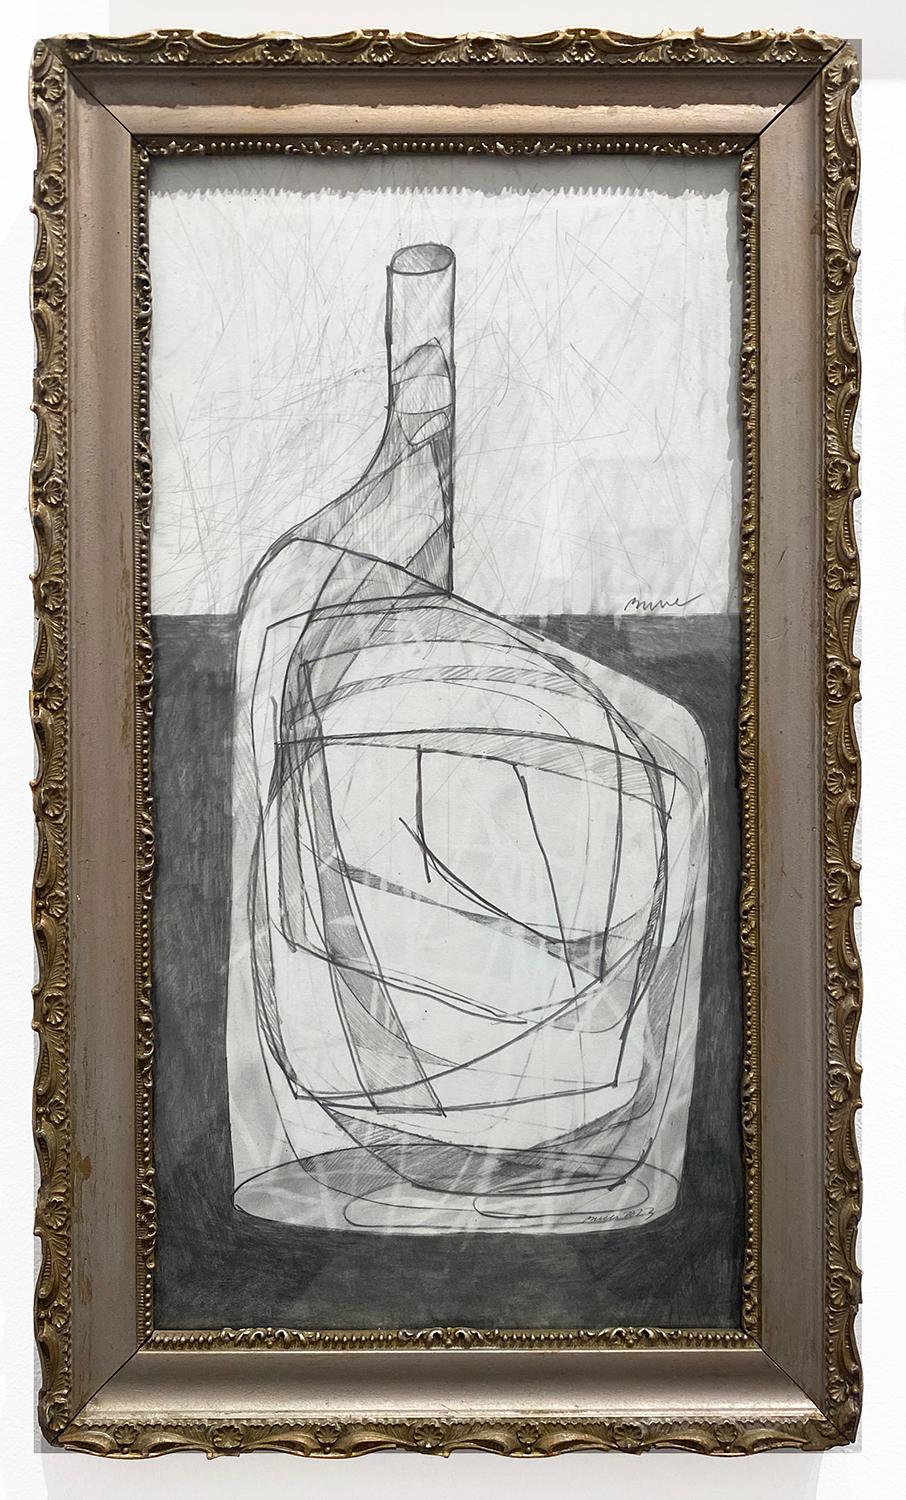 Morandi 19 (Abstract, Cubist Still Life Drawing Inspired by Morandi Bottle) 